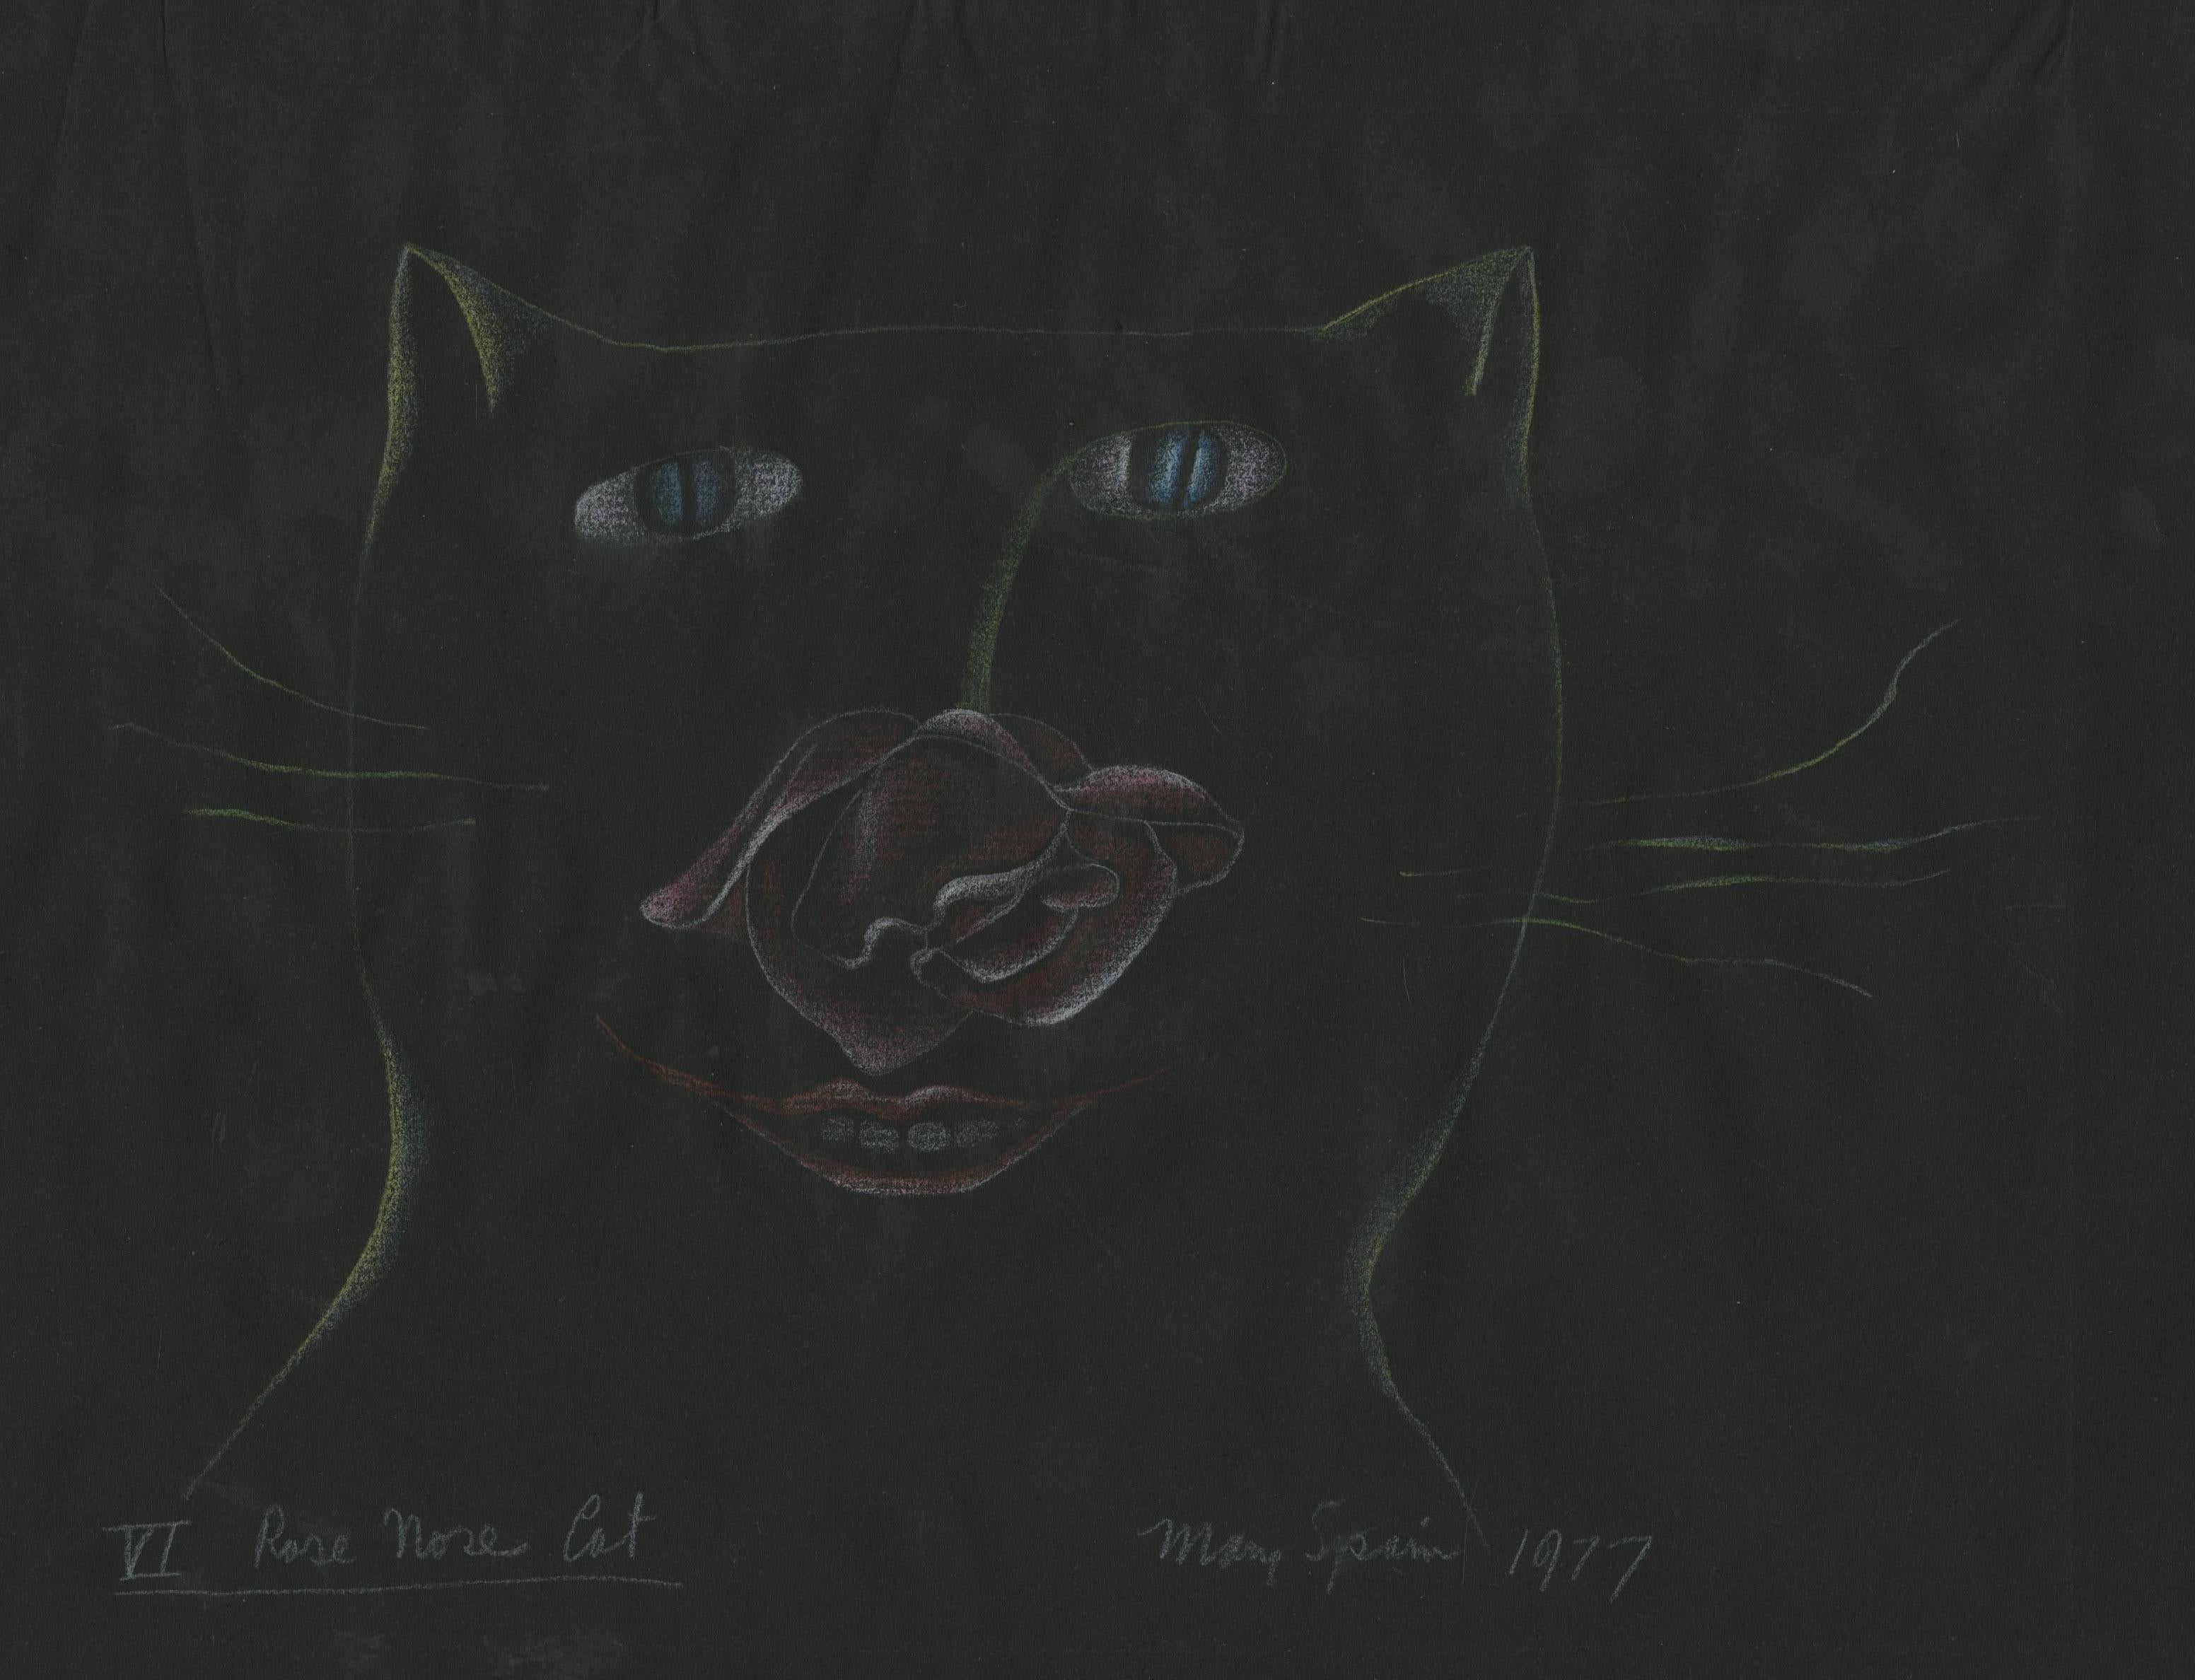 Mary Spain Animal Art - VI Rose Nose Cat